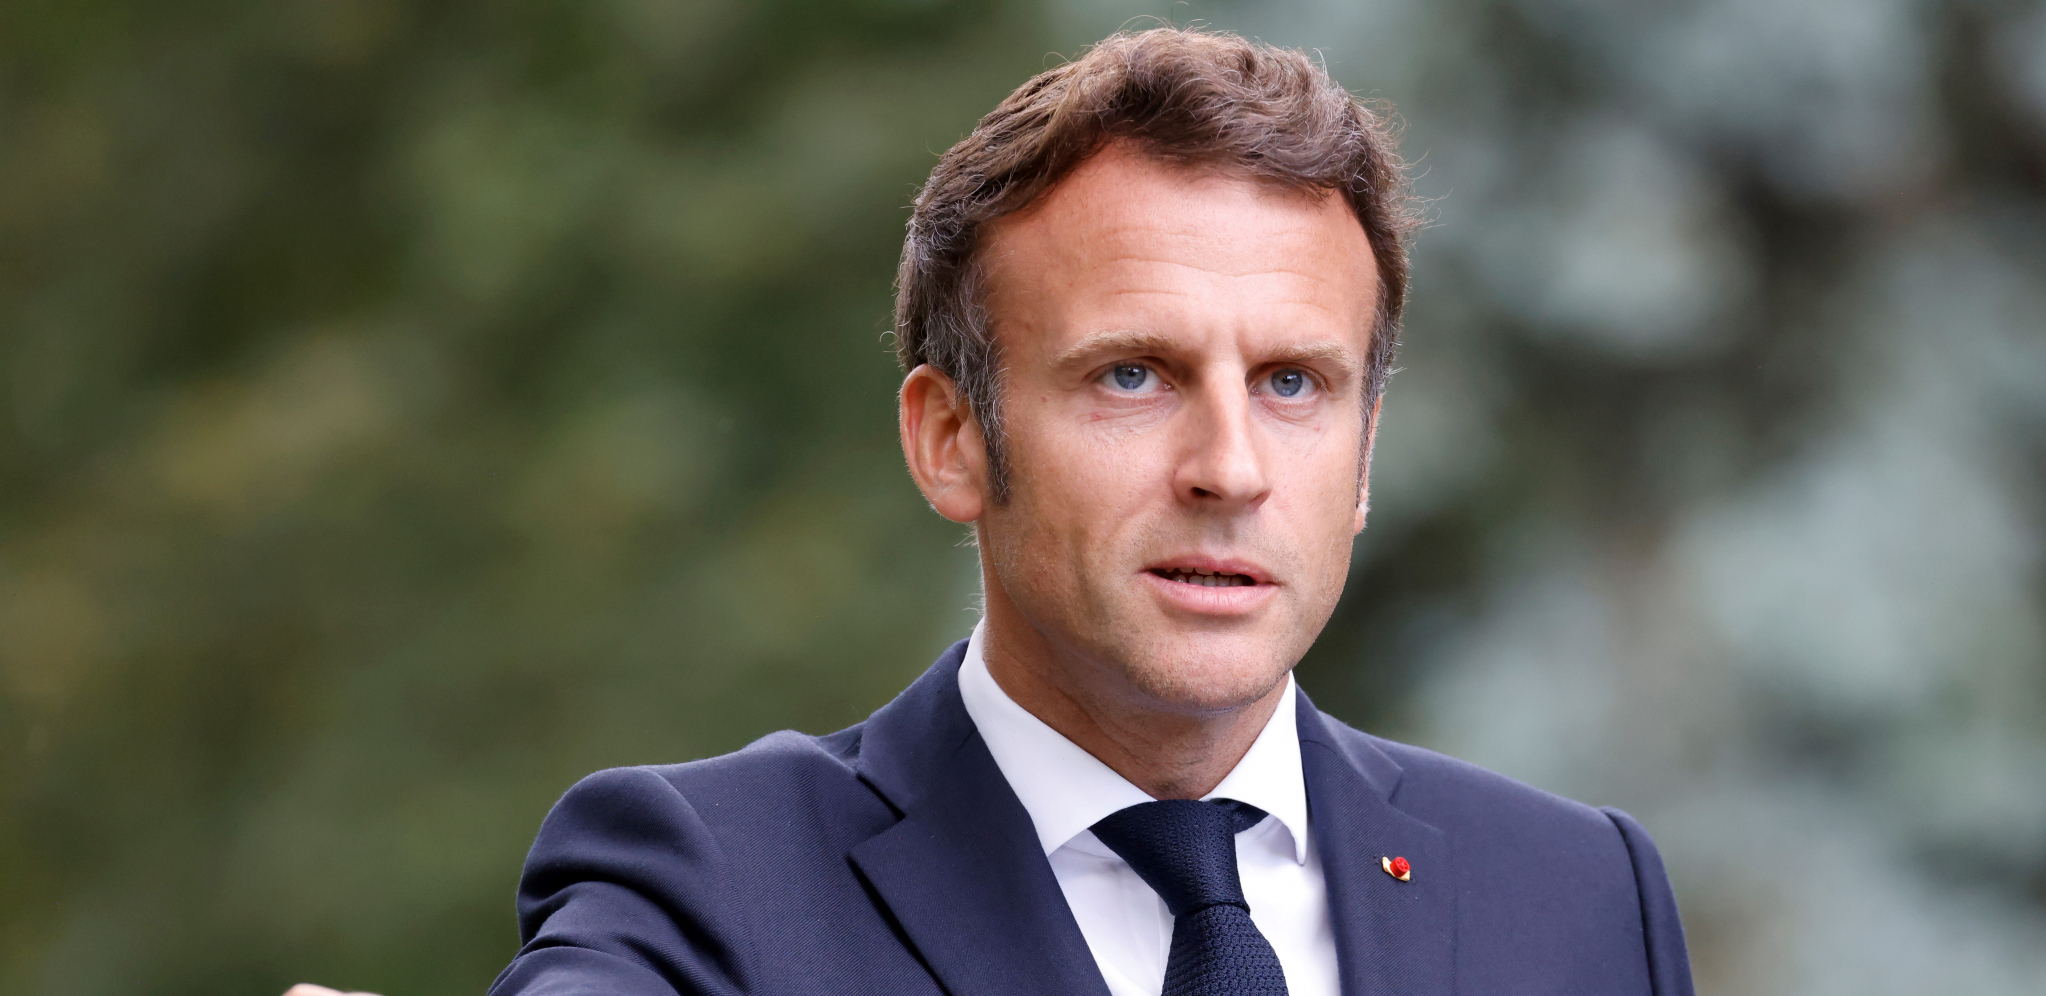 MOŽDA JE VIDOVIT? Predsednik Francuske prognozirao tačan rezultat utakmice Francuska - Poljska